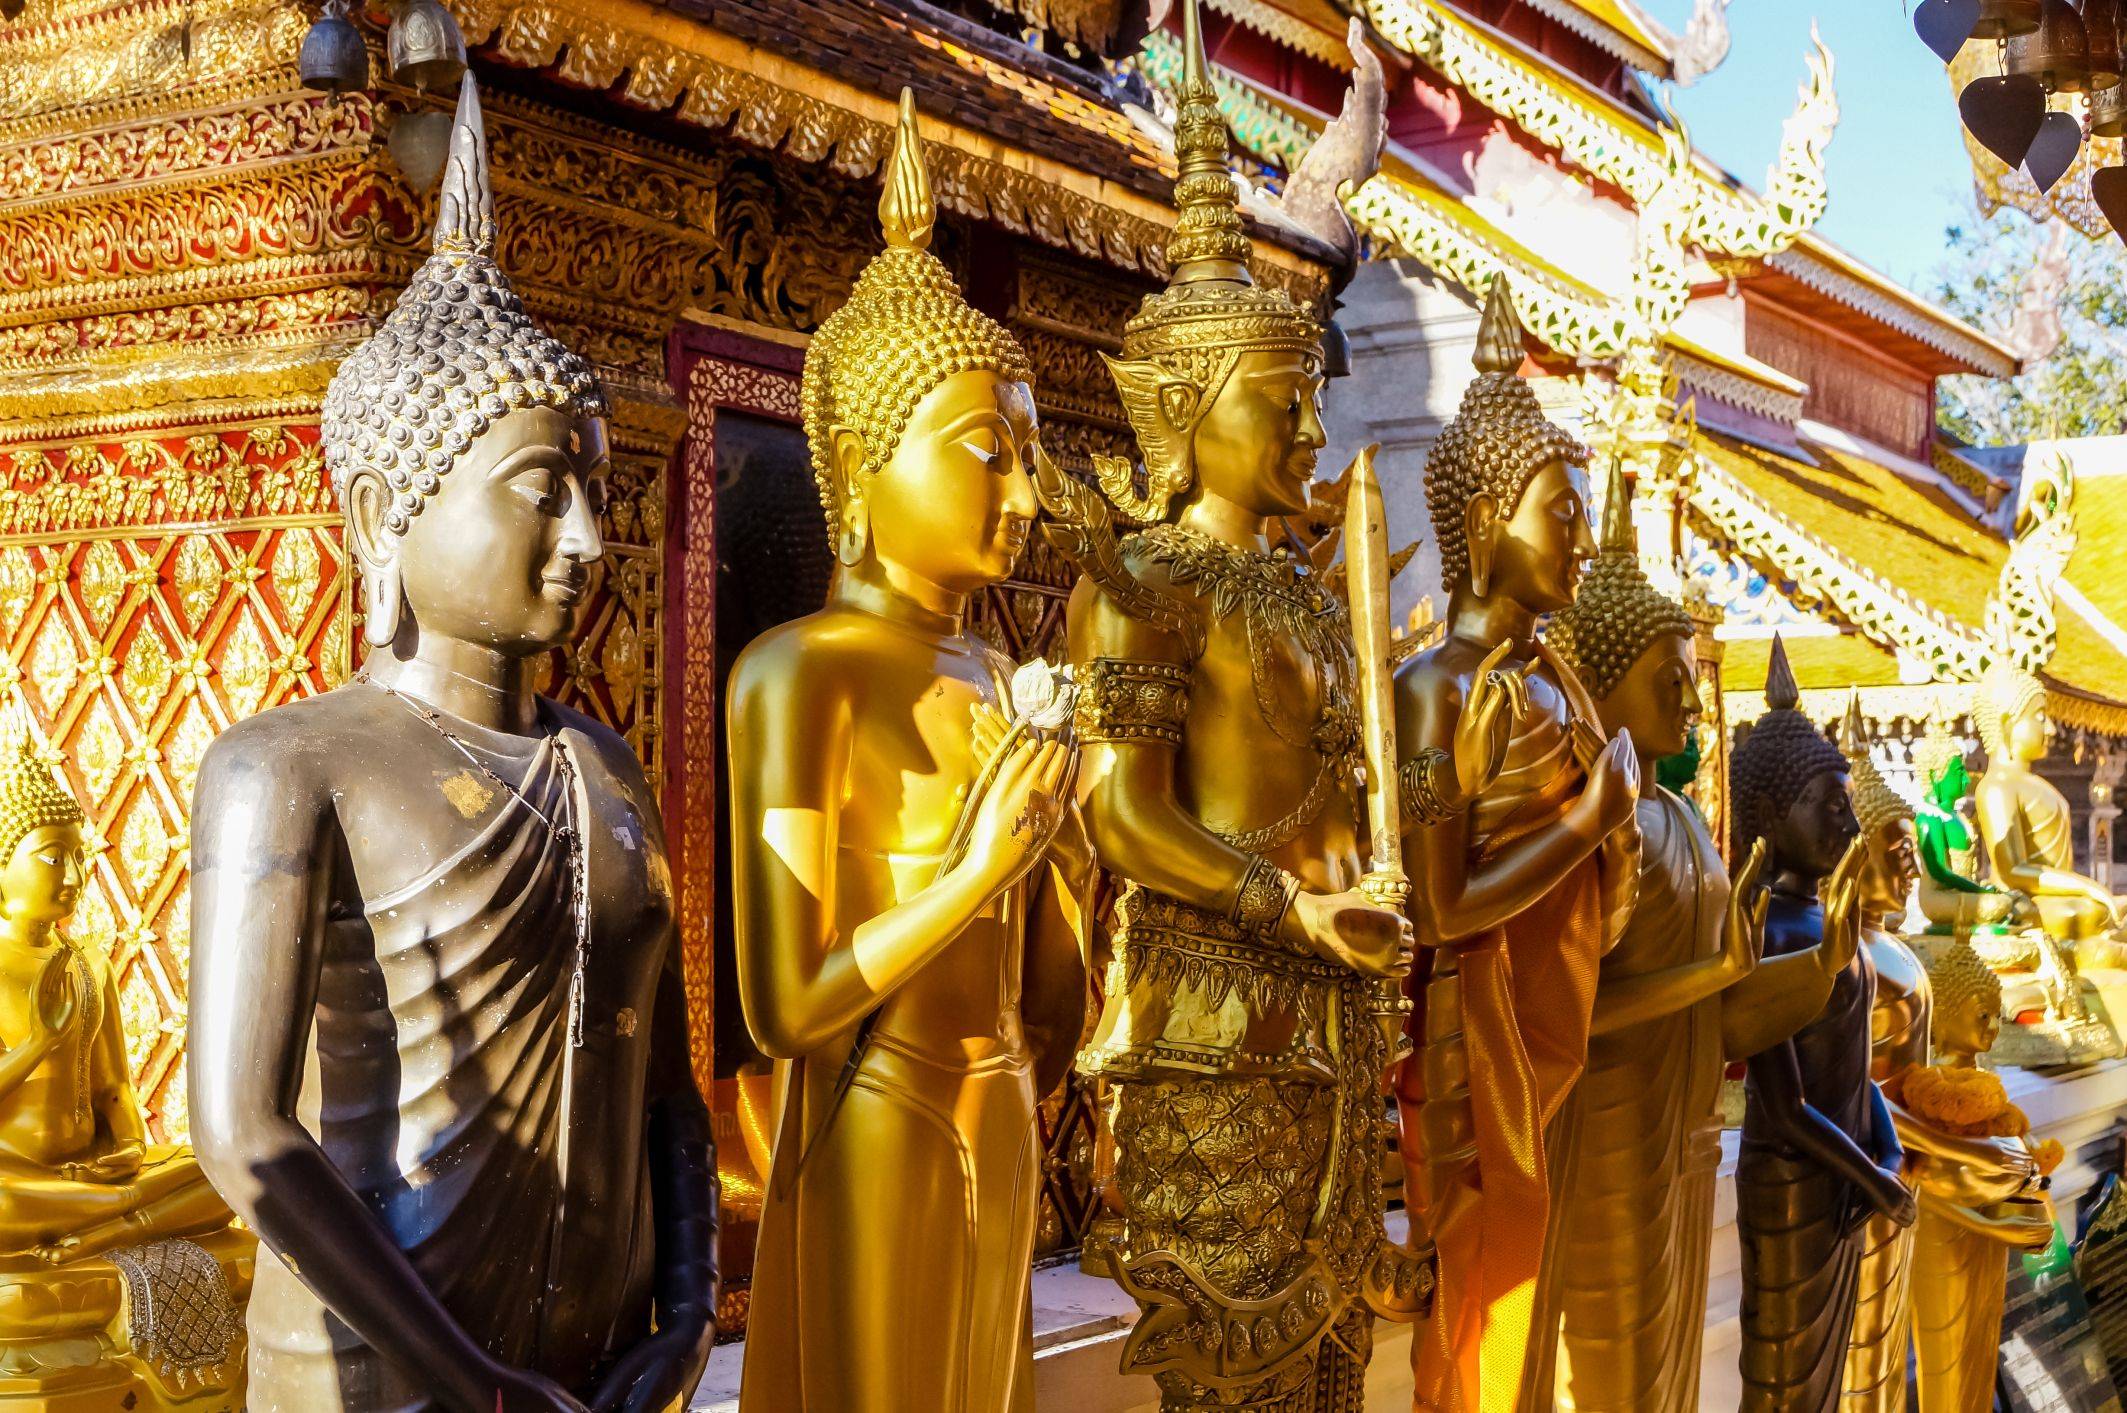 Volamos de Bangkok a Chiang Mai, el norte con más de trescientos templos nos espera!